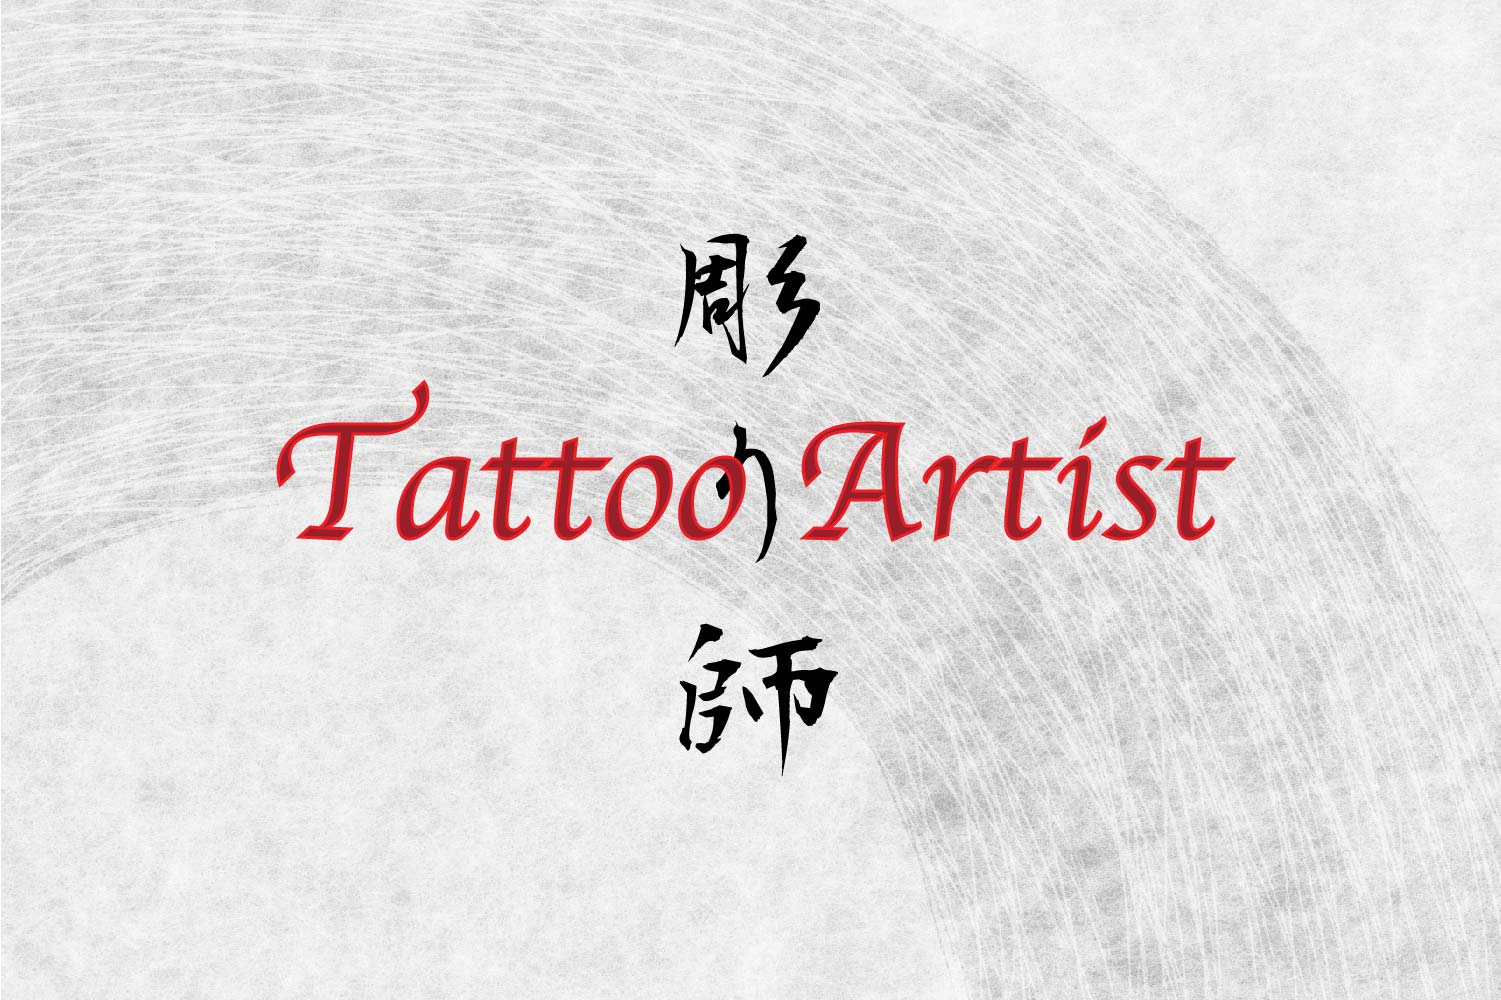 Tattoo Artist In Japanese Kanji symbols